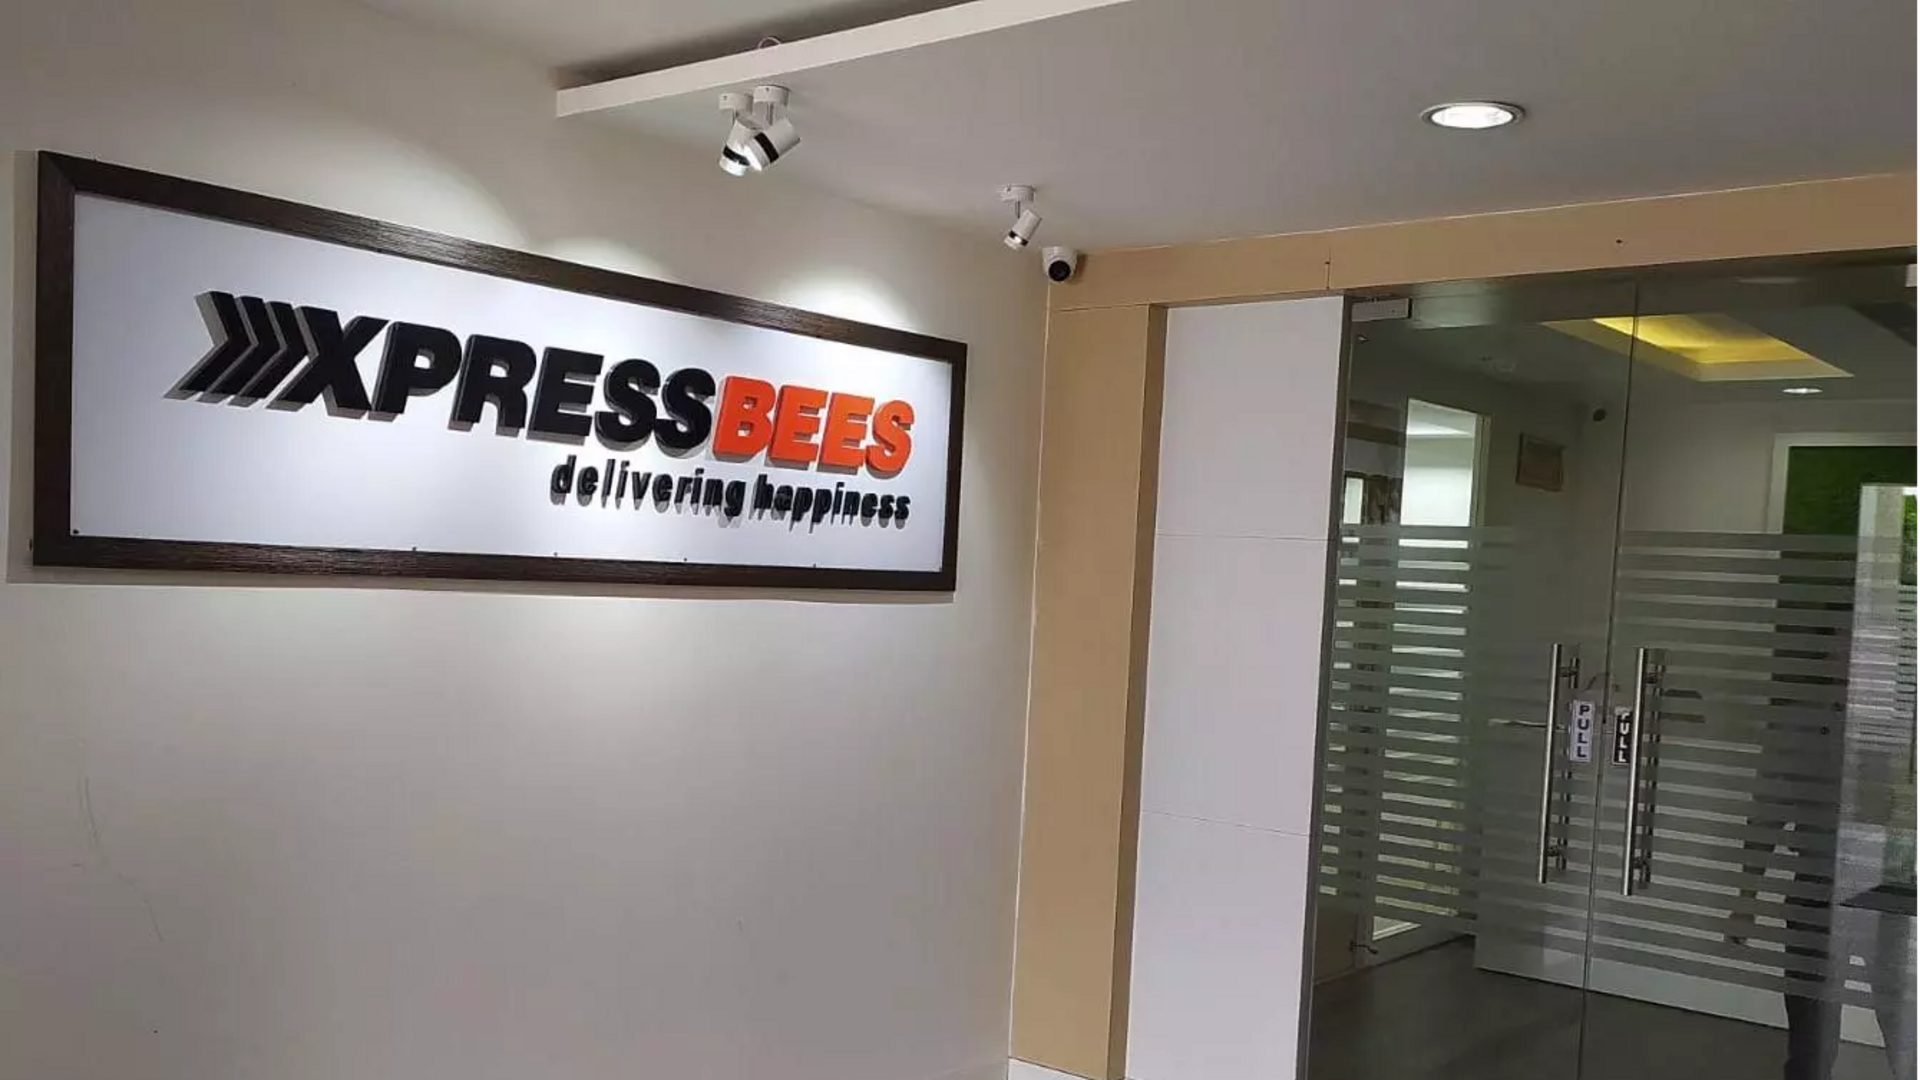 Indian start-up Xpressbees raises $80 million from Ontario Teachers' fund